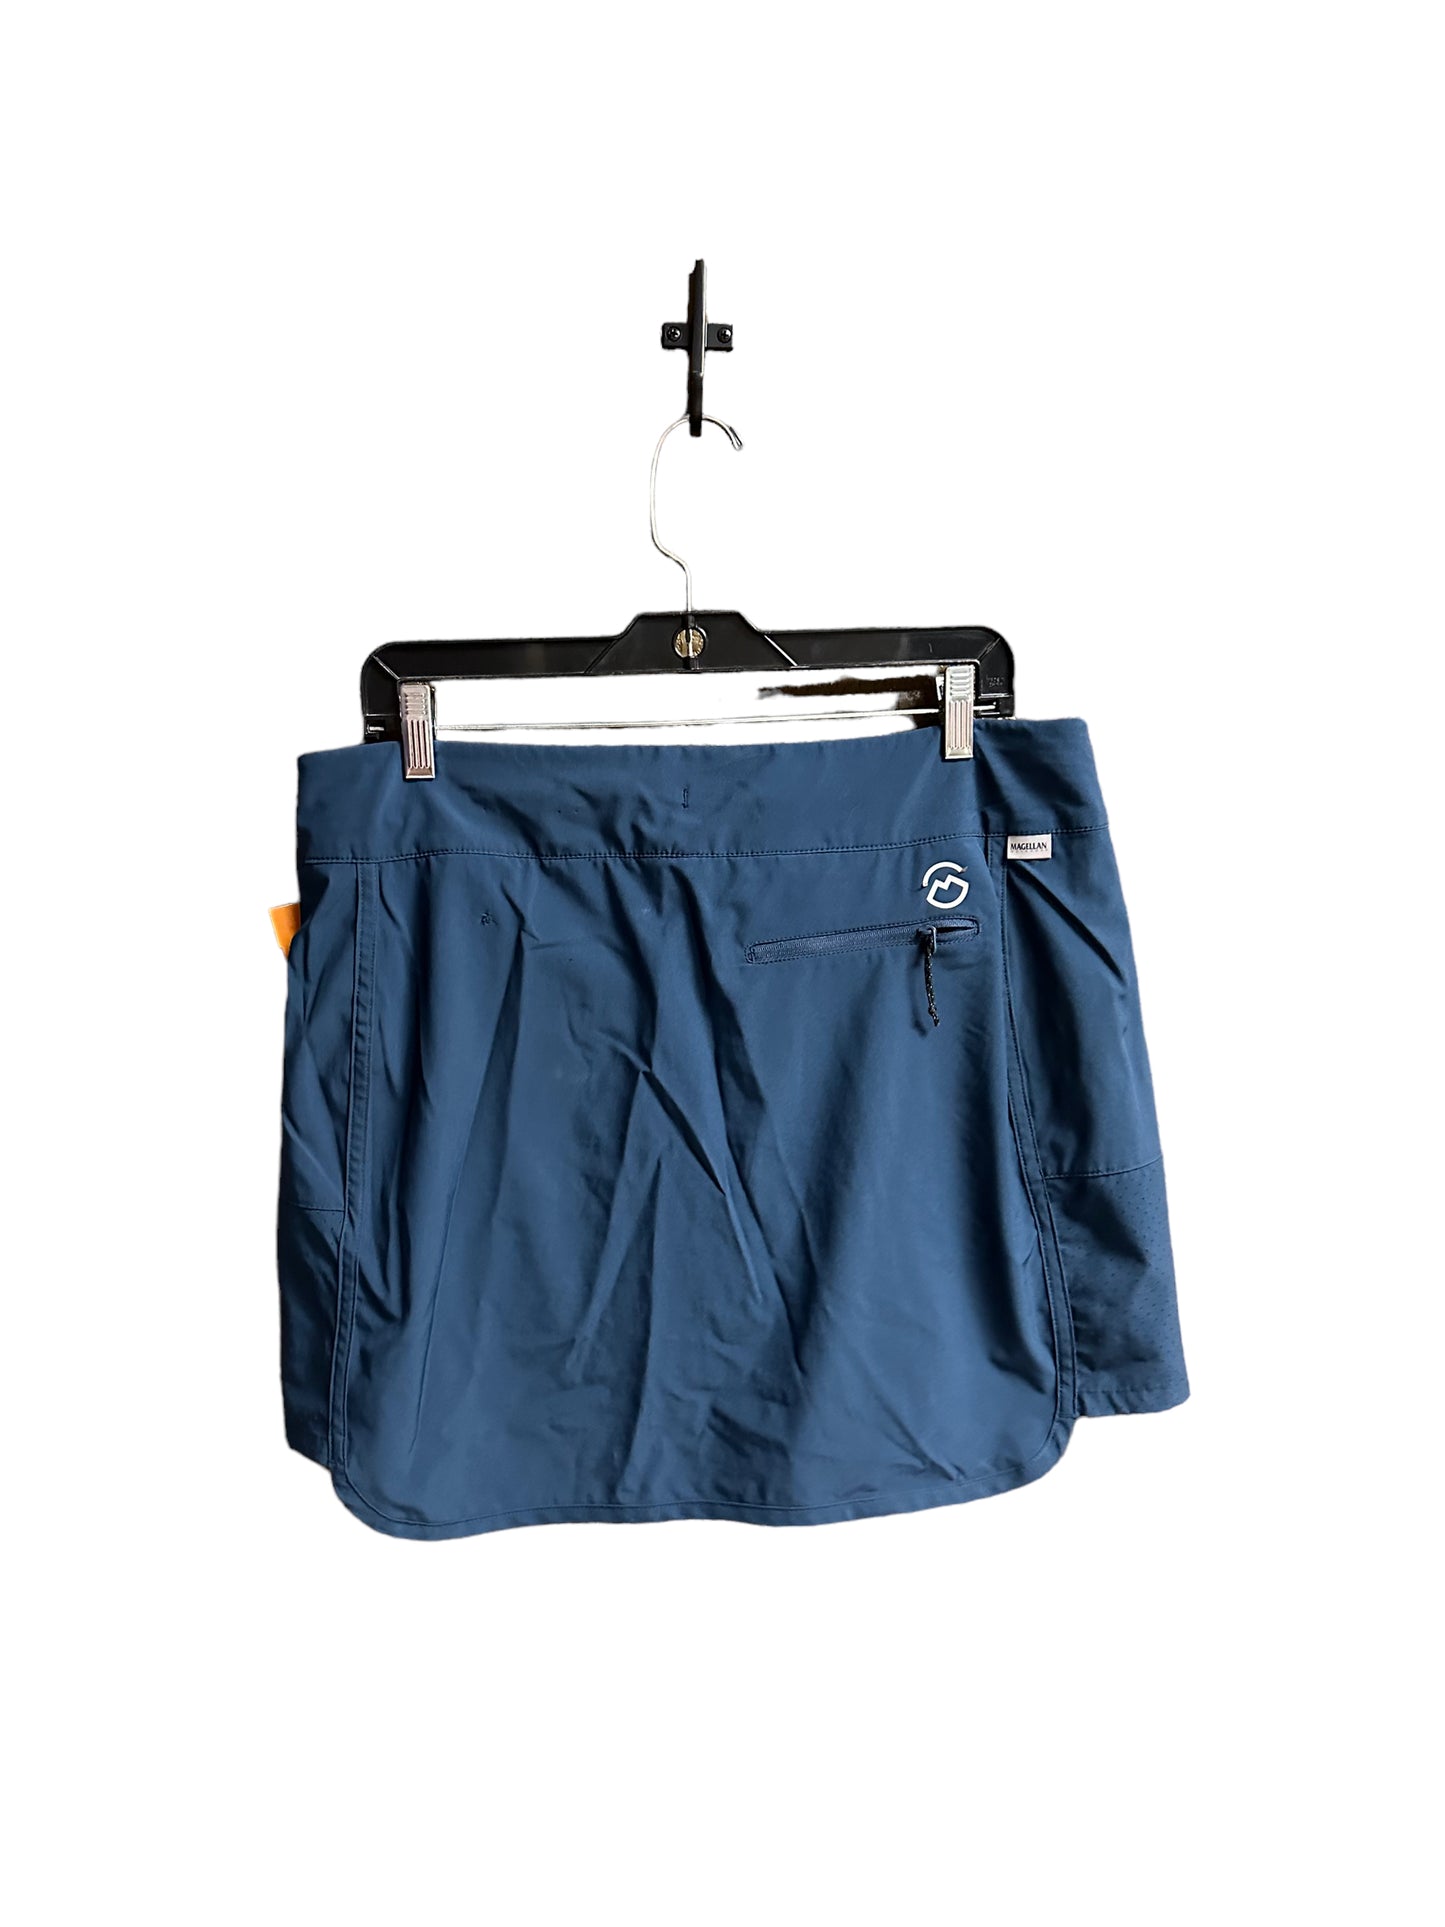 Athletic Skirt Skort By Magellan  Size: L